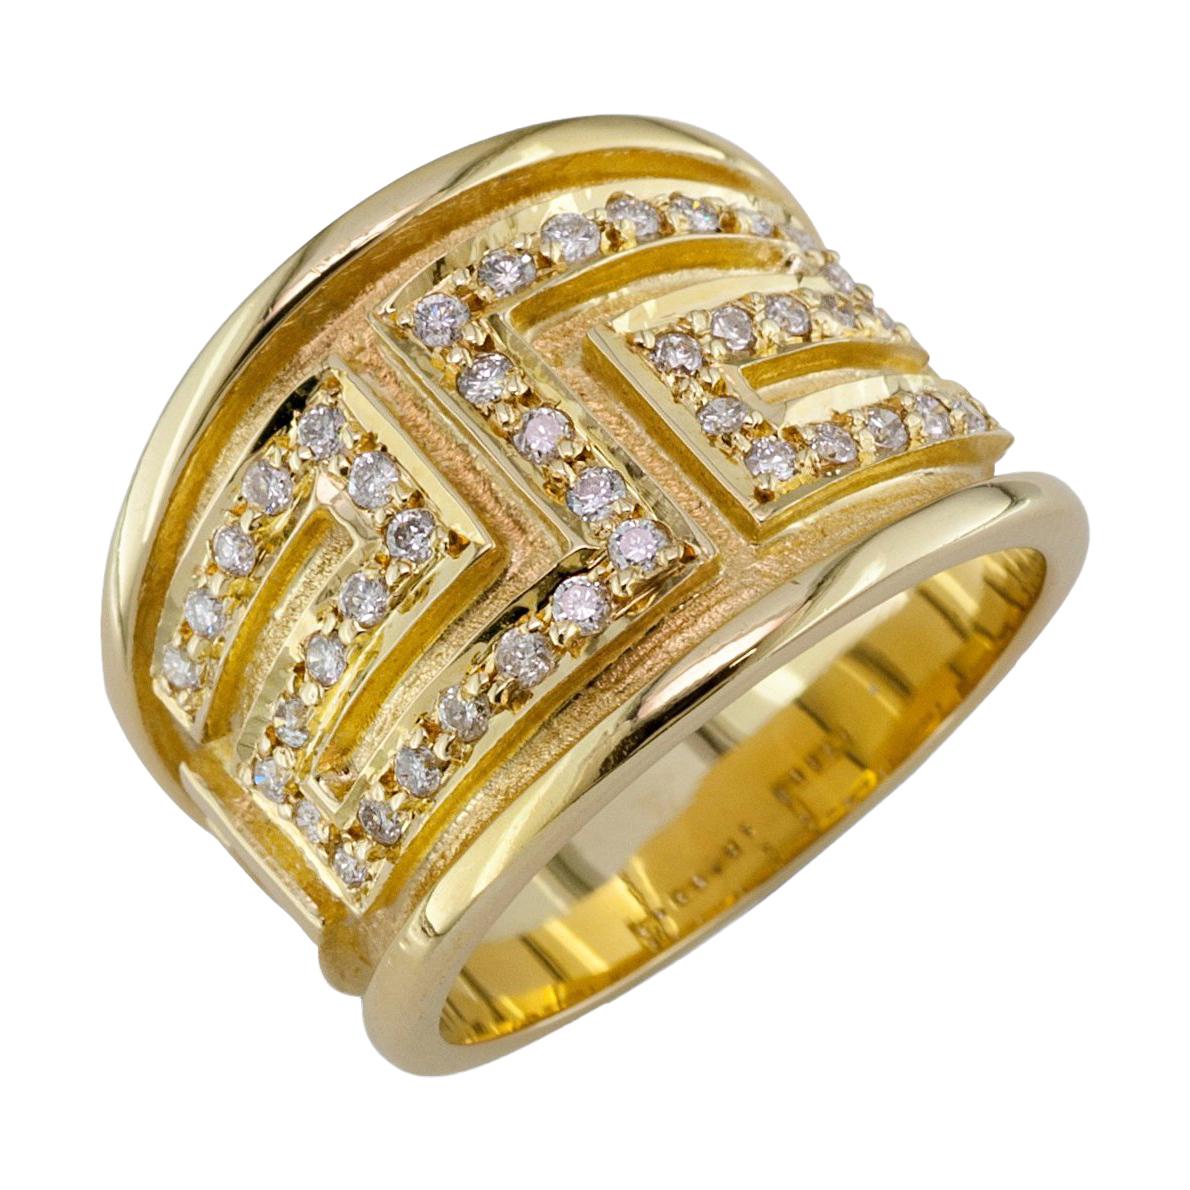 Georgios Collections 18 Karat Yellow Gold Diamond Ring with the Greek Key Design